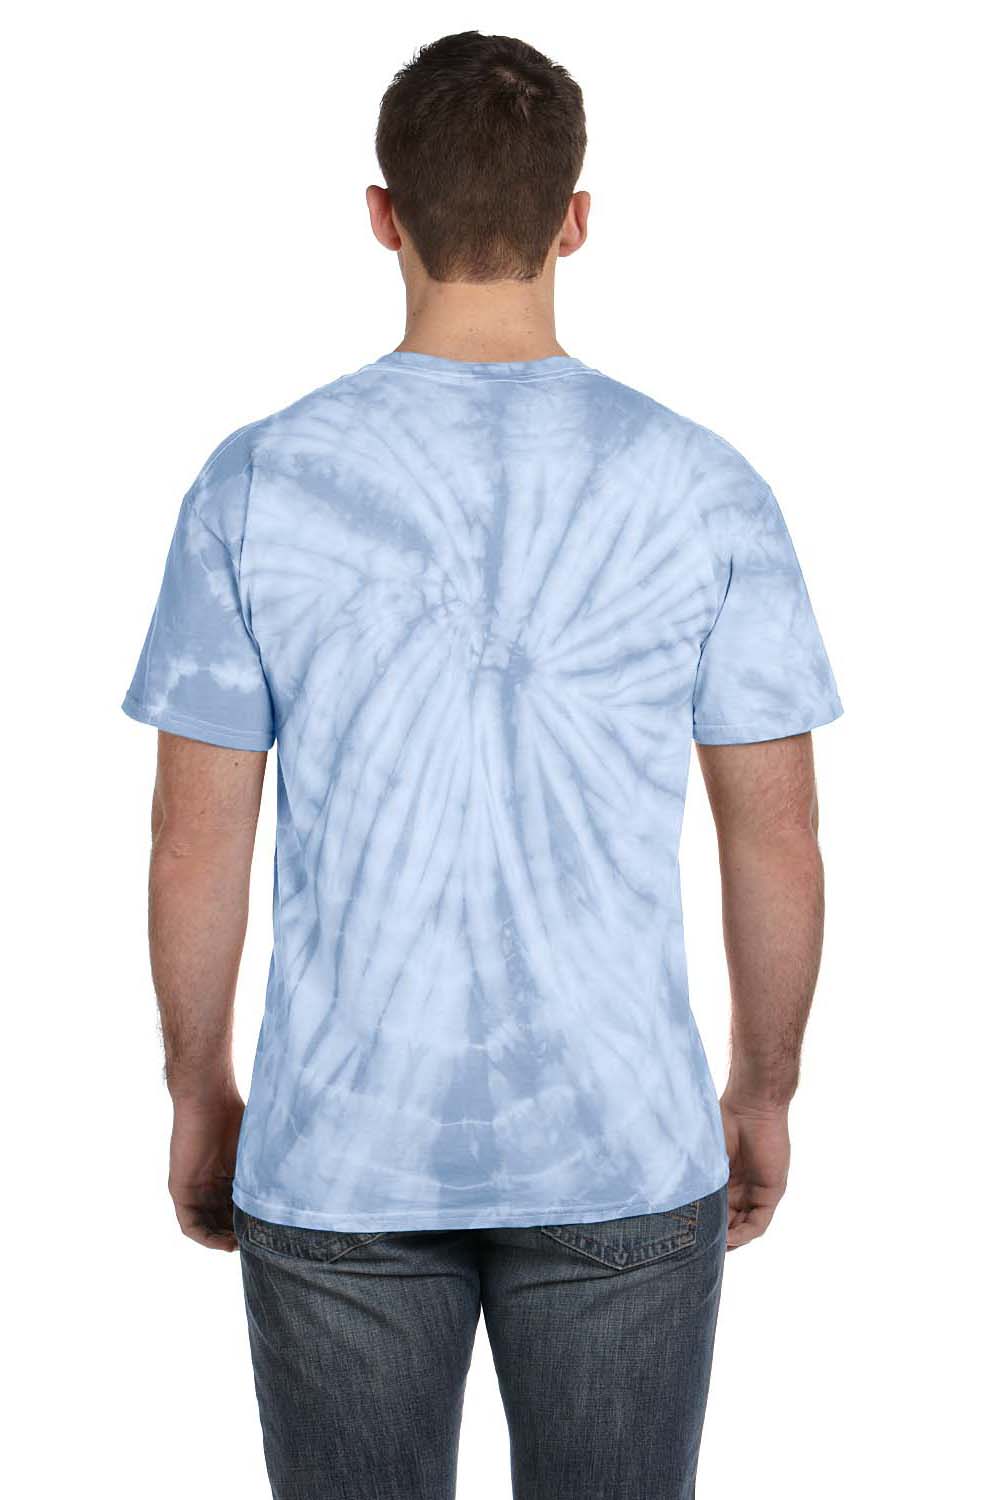 Tie-Dye CD101 Mens Short Sleeve Crewneck T-Shirt Baby Blue Back